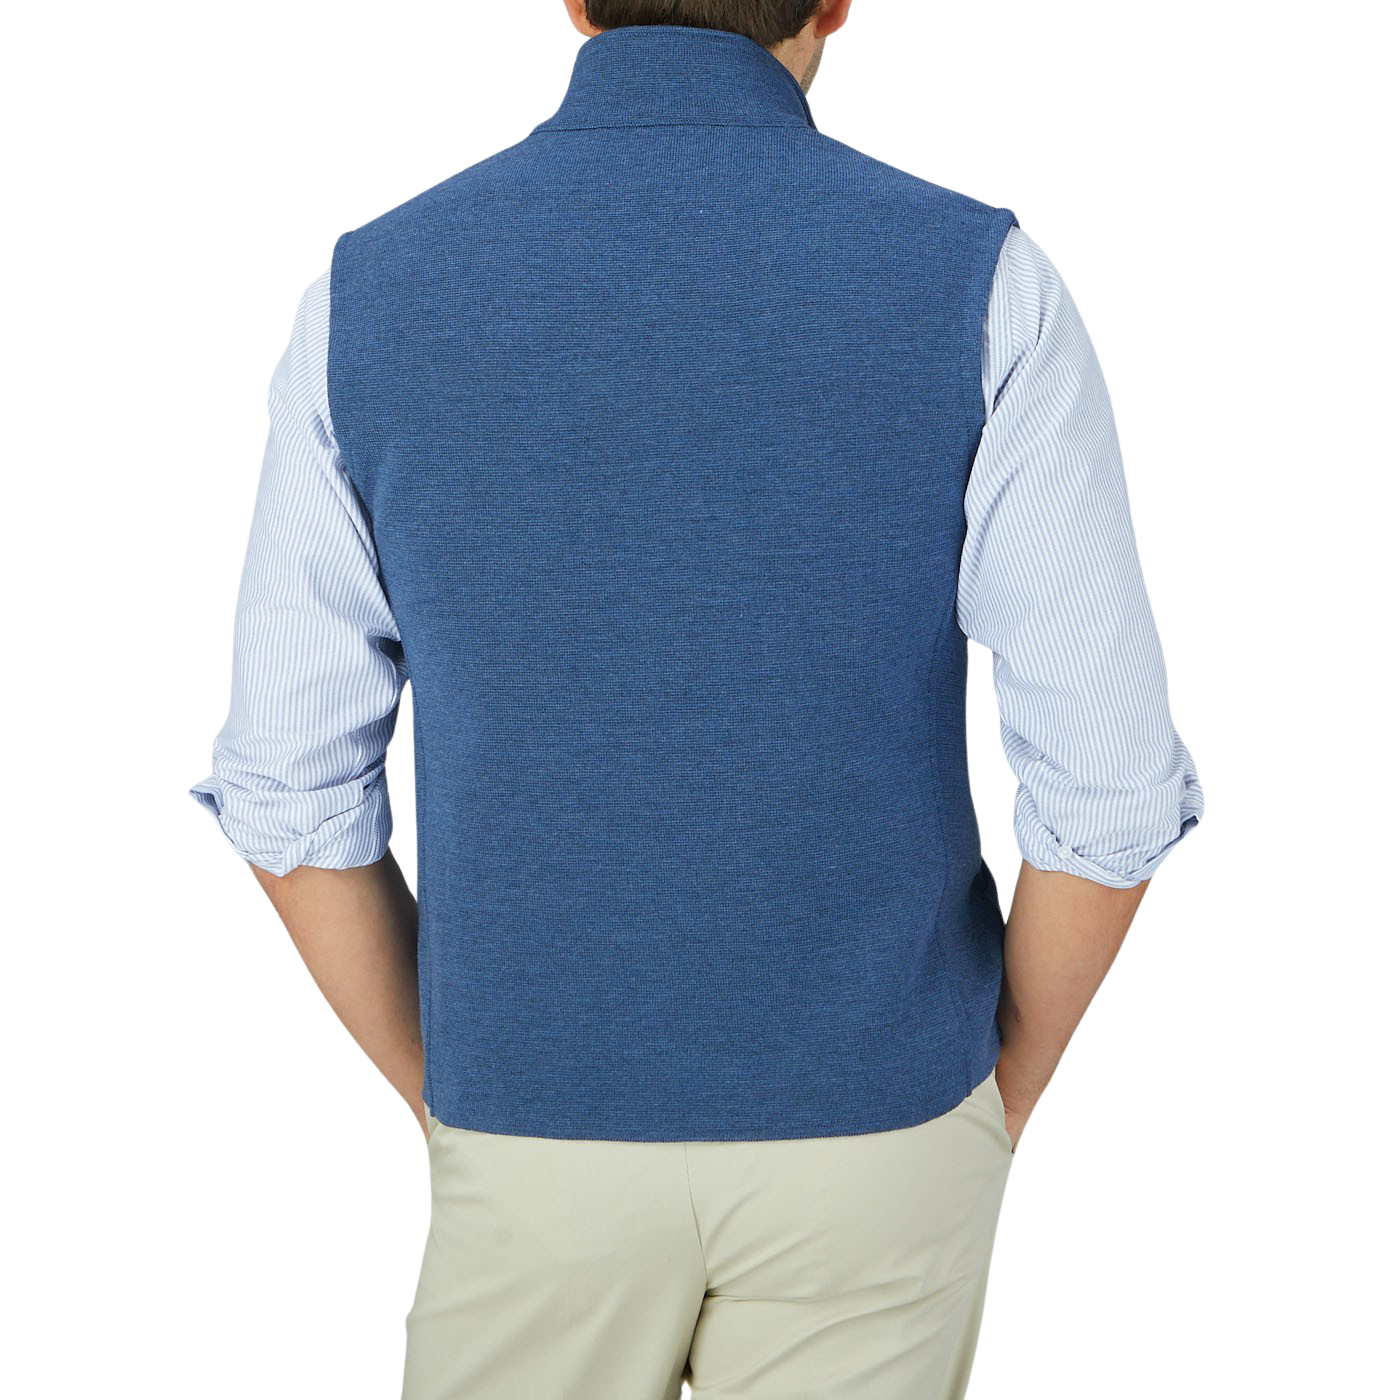 The back view of a man wearing a Maurizio Baldassari Denim Blue Milano Stitch Wool Zip Gilet.